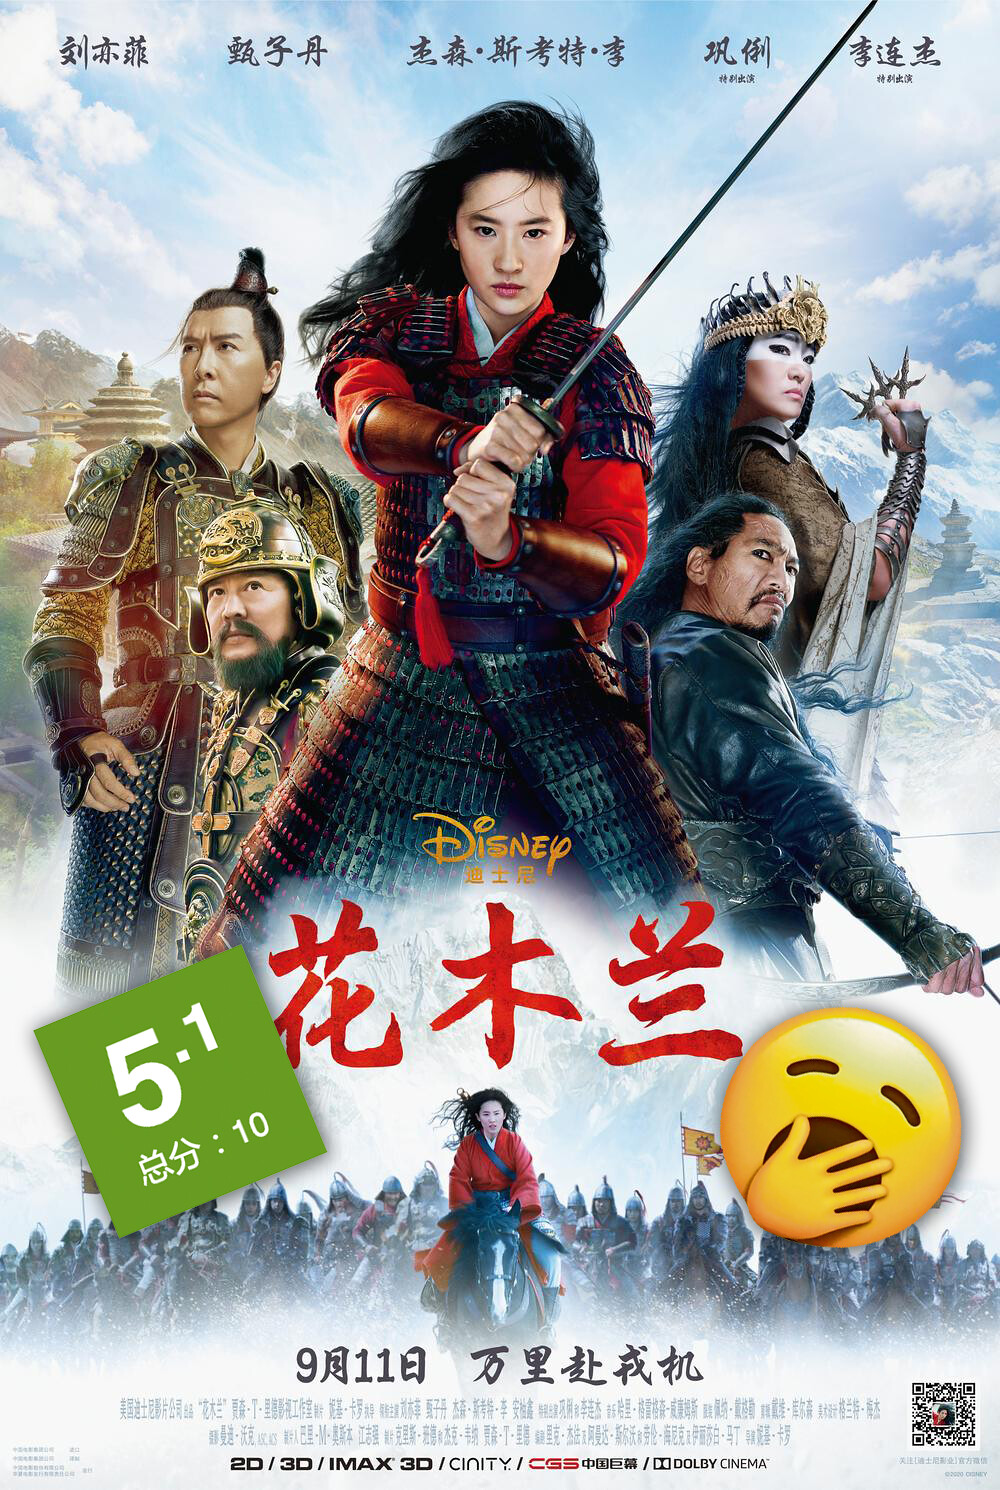 Chinese audiences hate Disney's Mulan